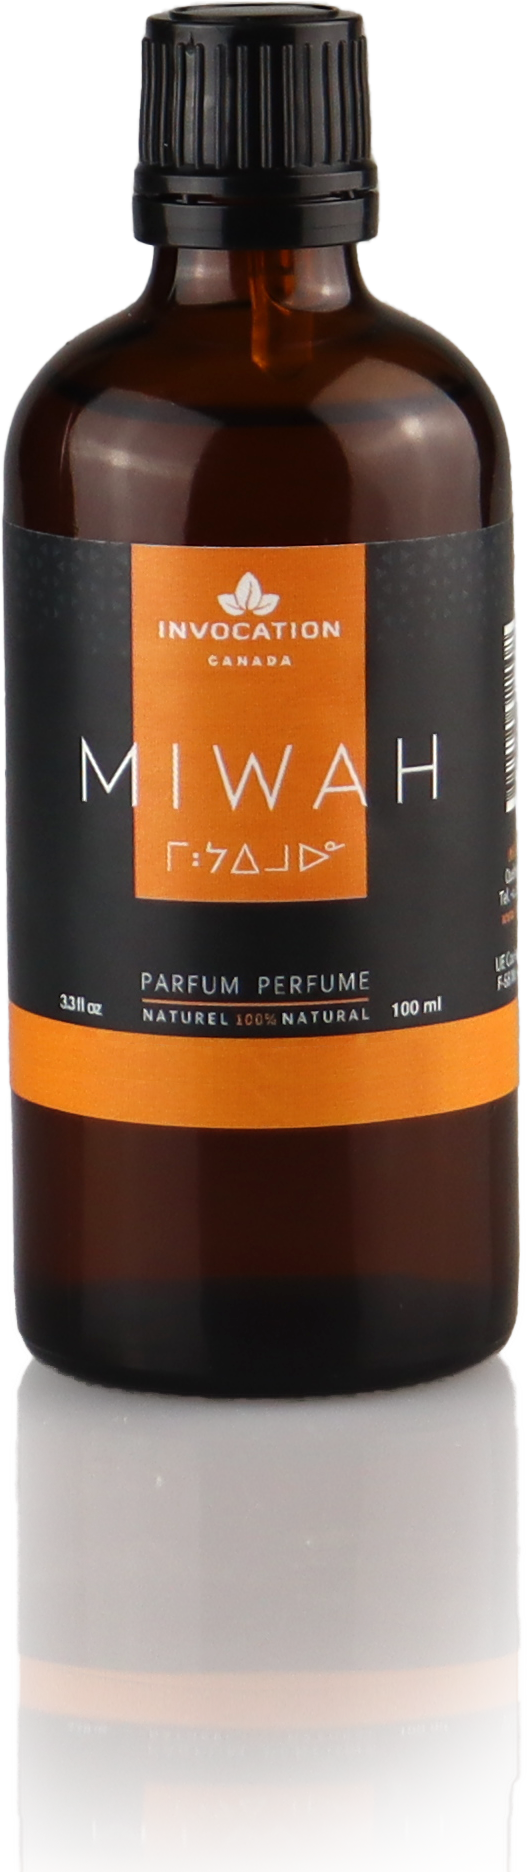 Miwah 100 ml (refill)